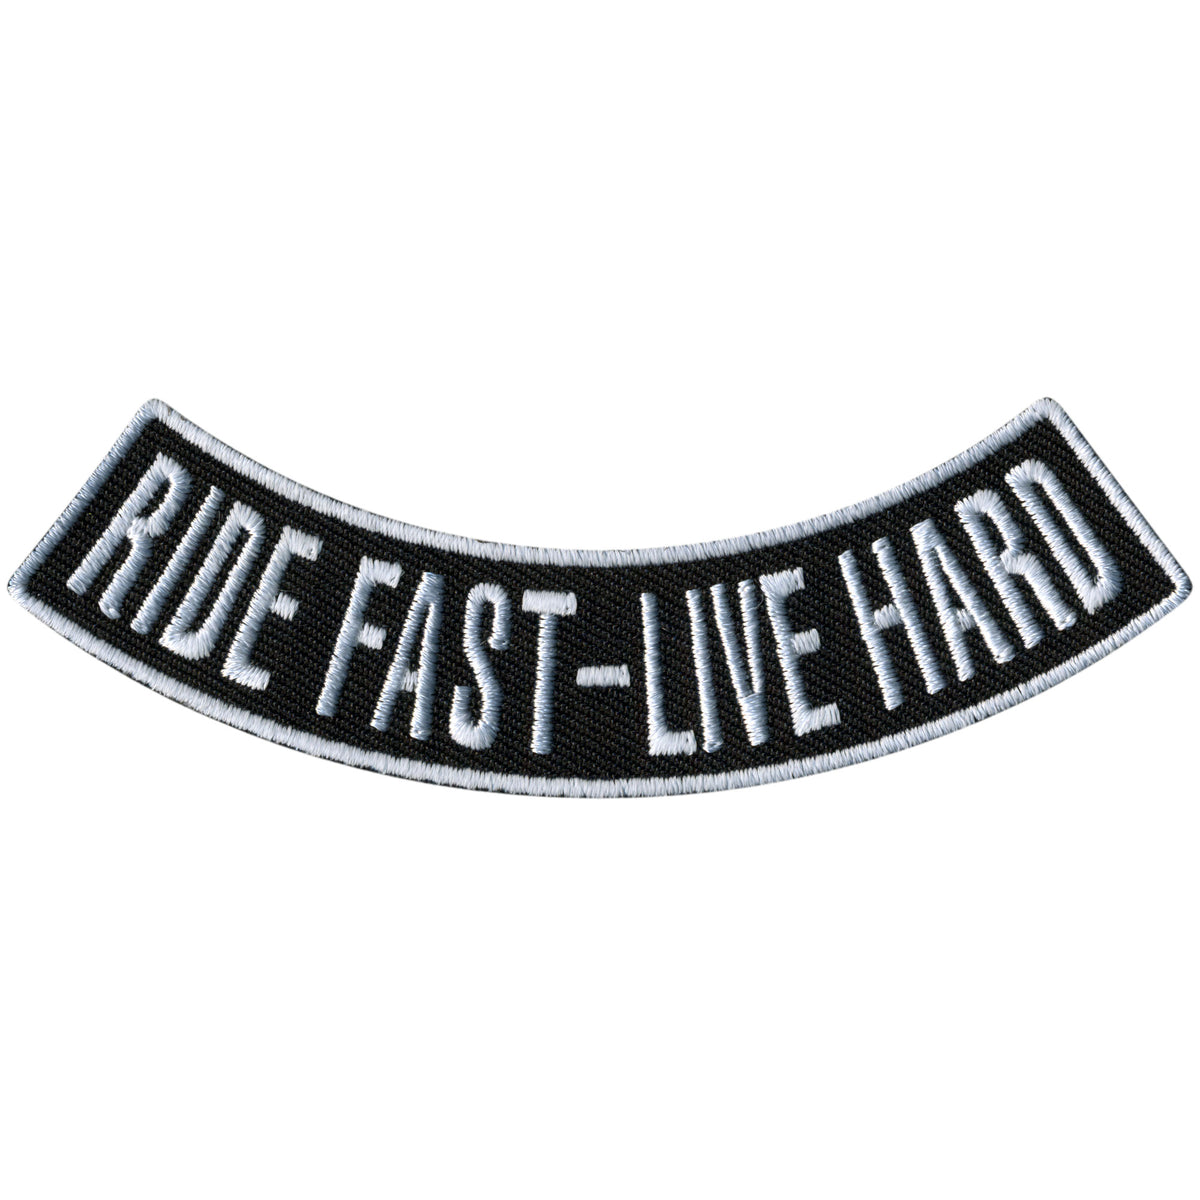 Hot Leathers Ride Fast - Live Hard 4” X 1” Bottom Rocker Patch